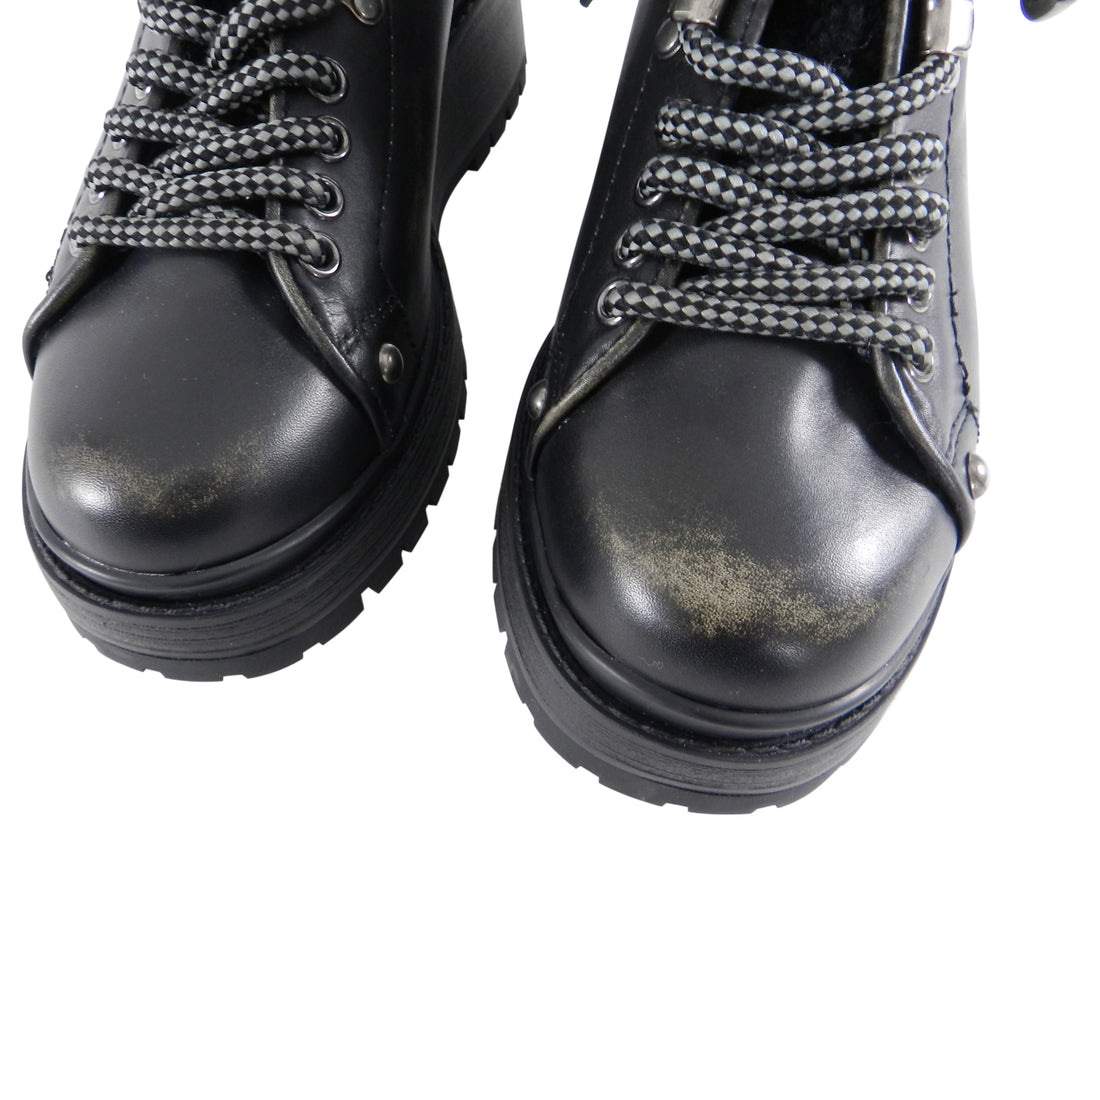 Miu Miu Black Lace Up Track Platform Boots with Knit Inset - 37